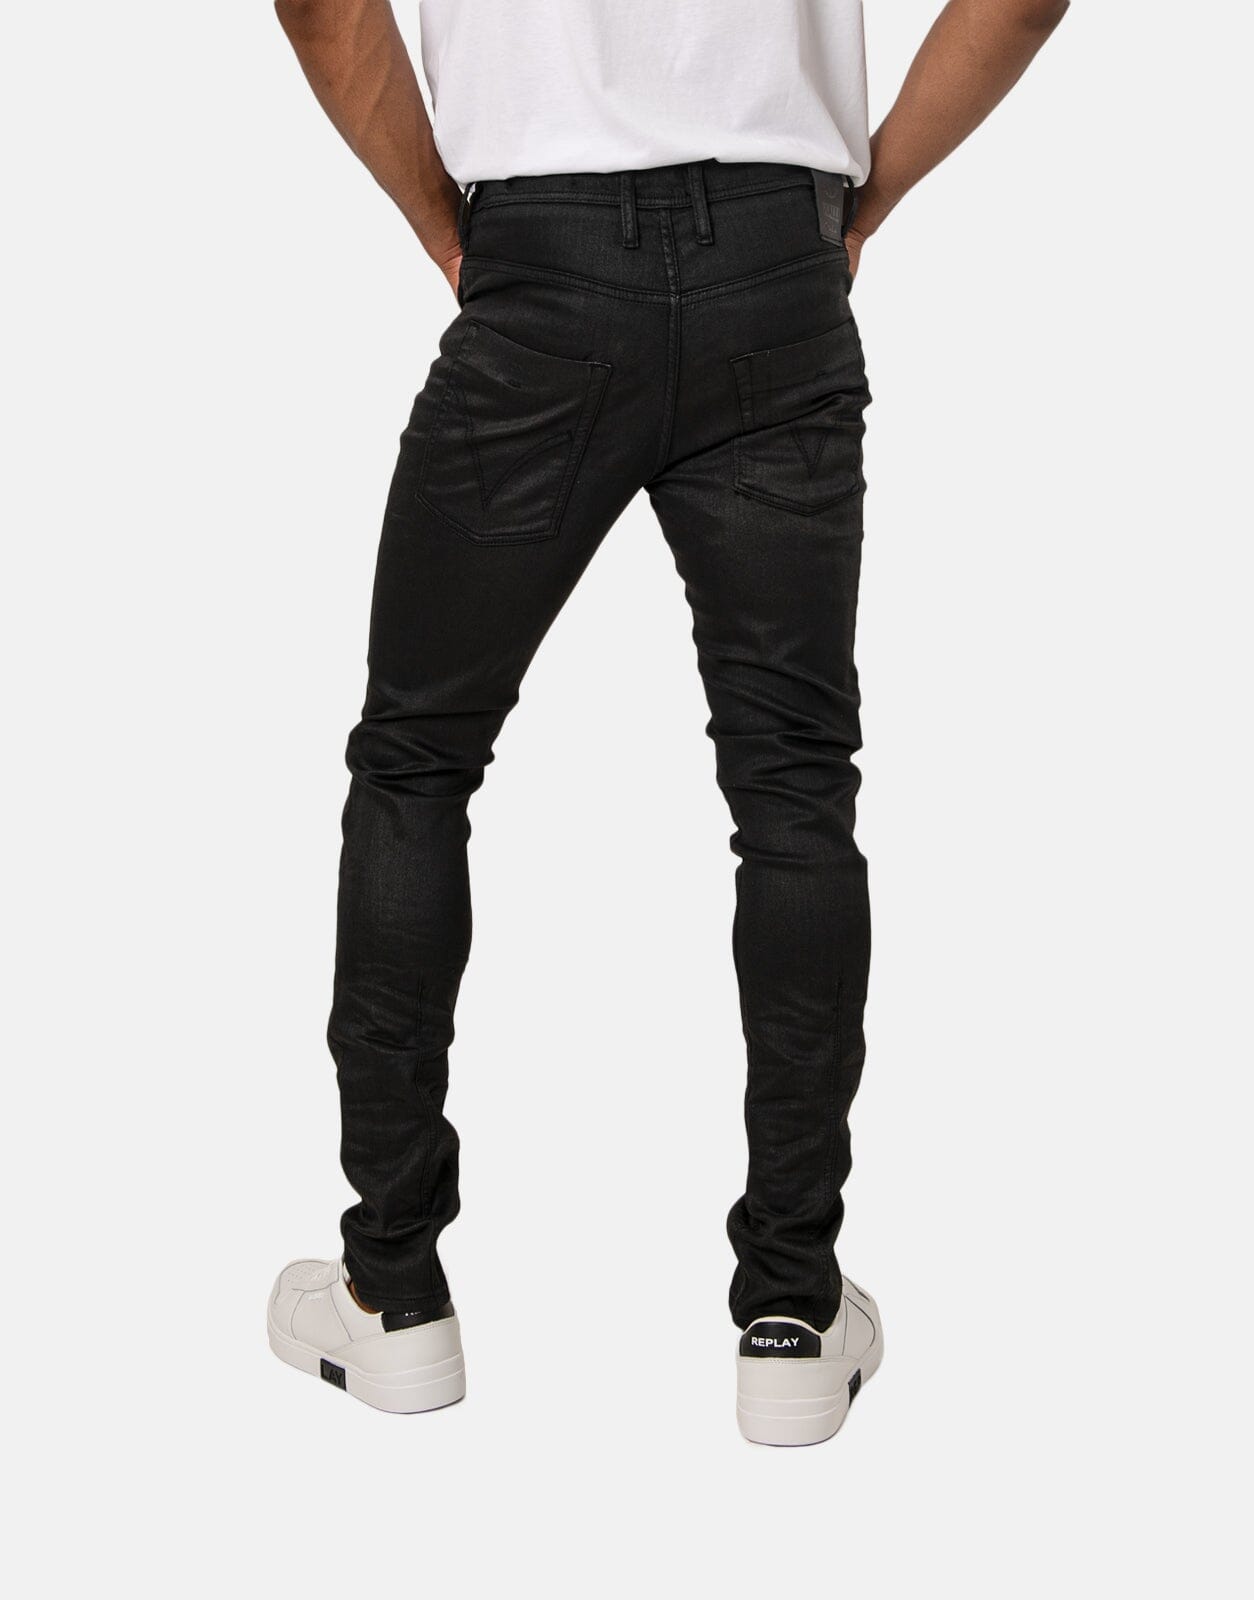 Vialli Elvinios Black Jogger Jeans